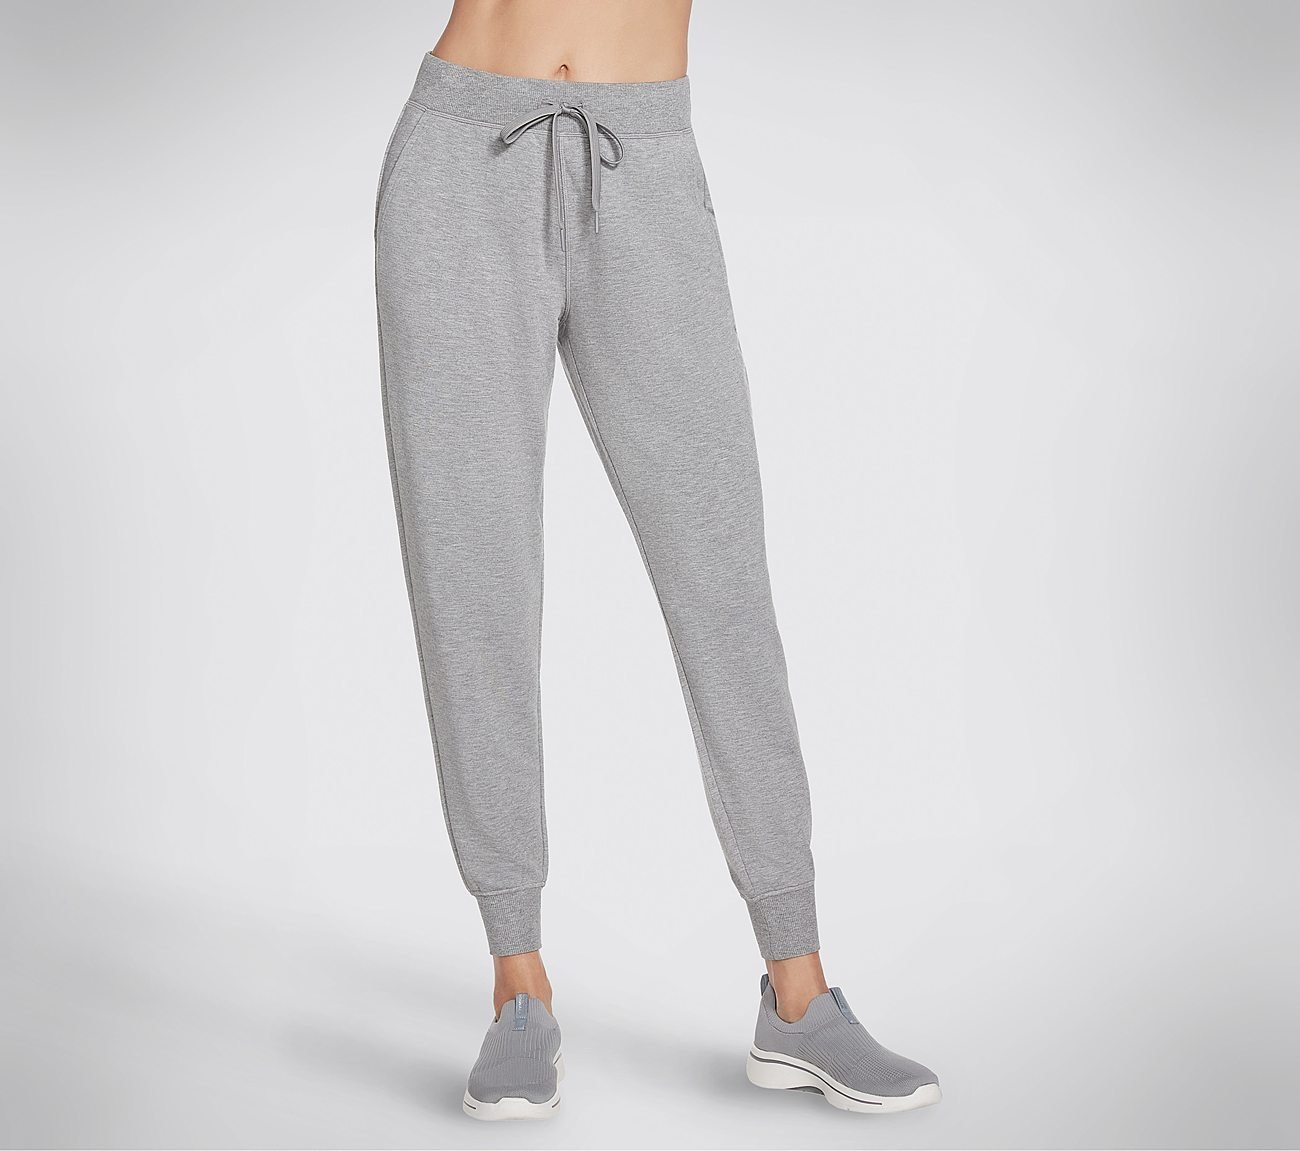 Skechers Restful Jogger, Light Grey Gym Pants For Women